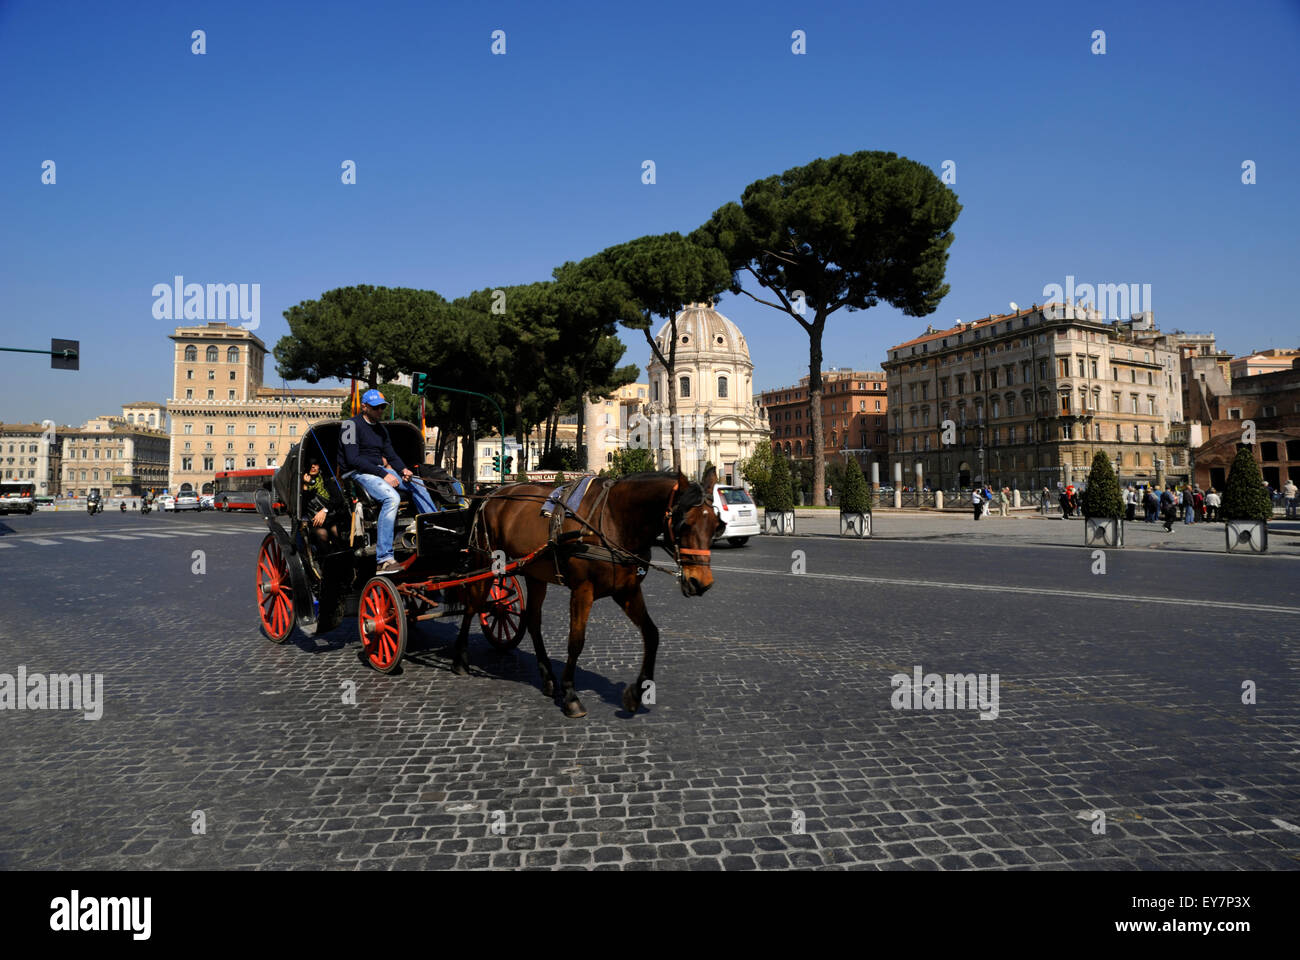 italy, rome, via dei fori imperiali, horse carriage Stock Photo